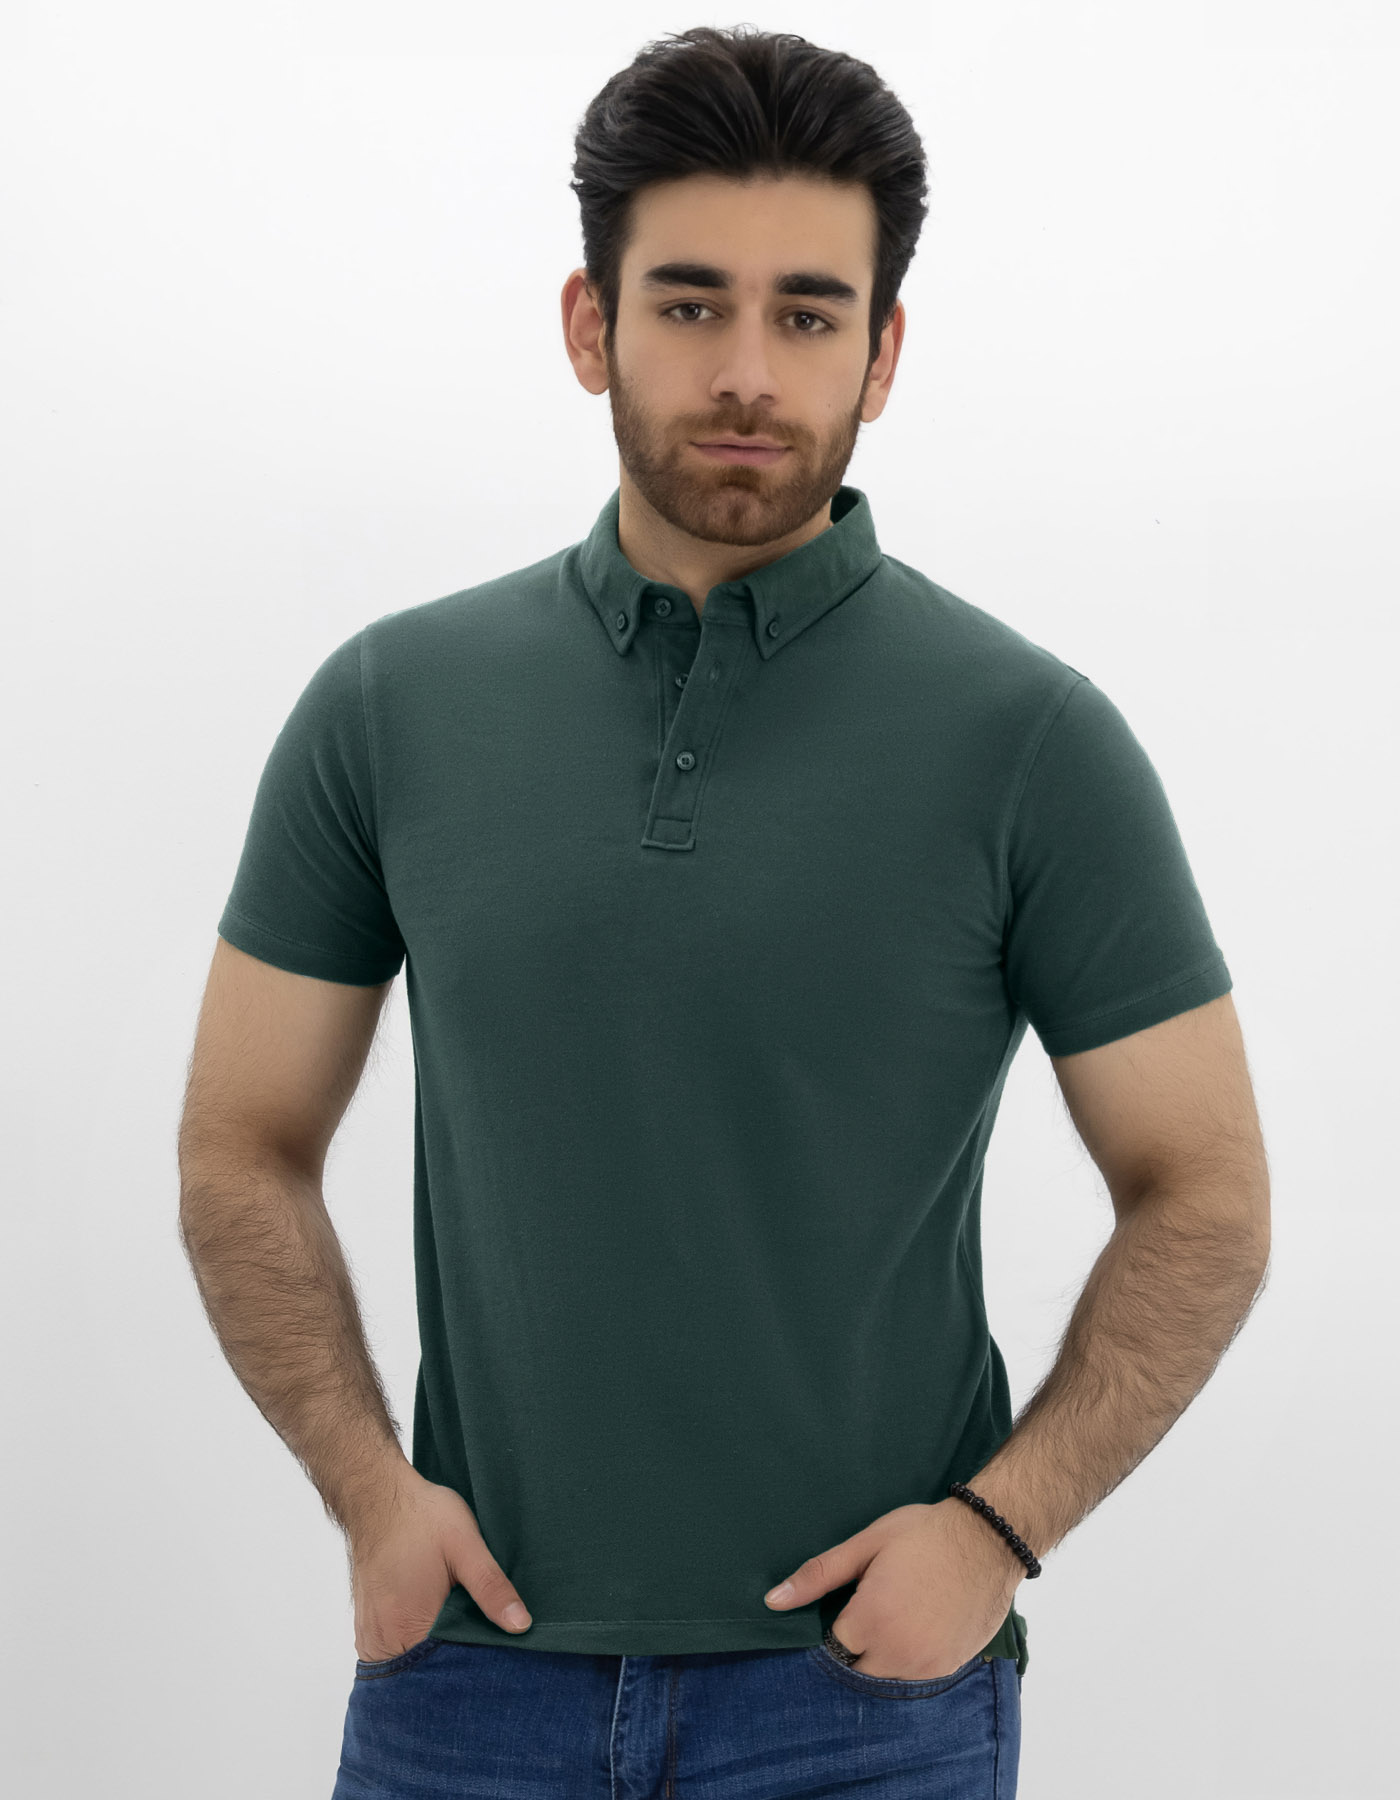 Green Polo Shirts For Men